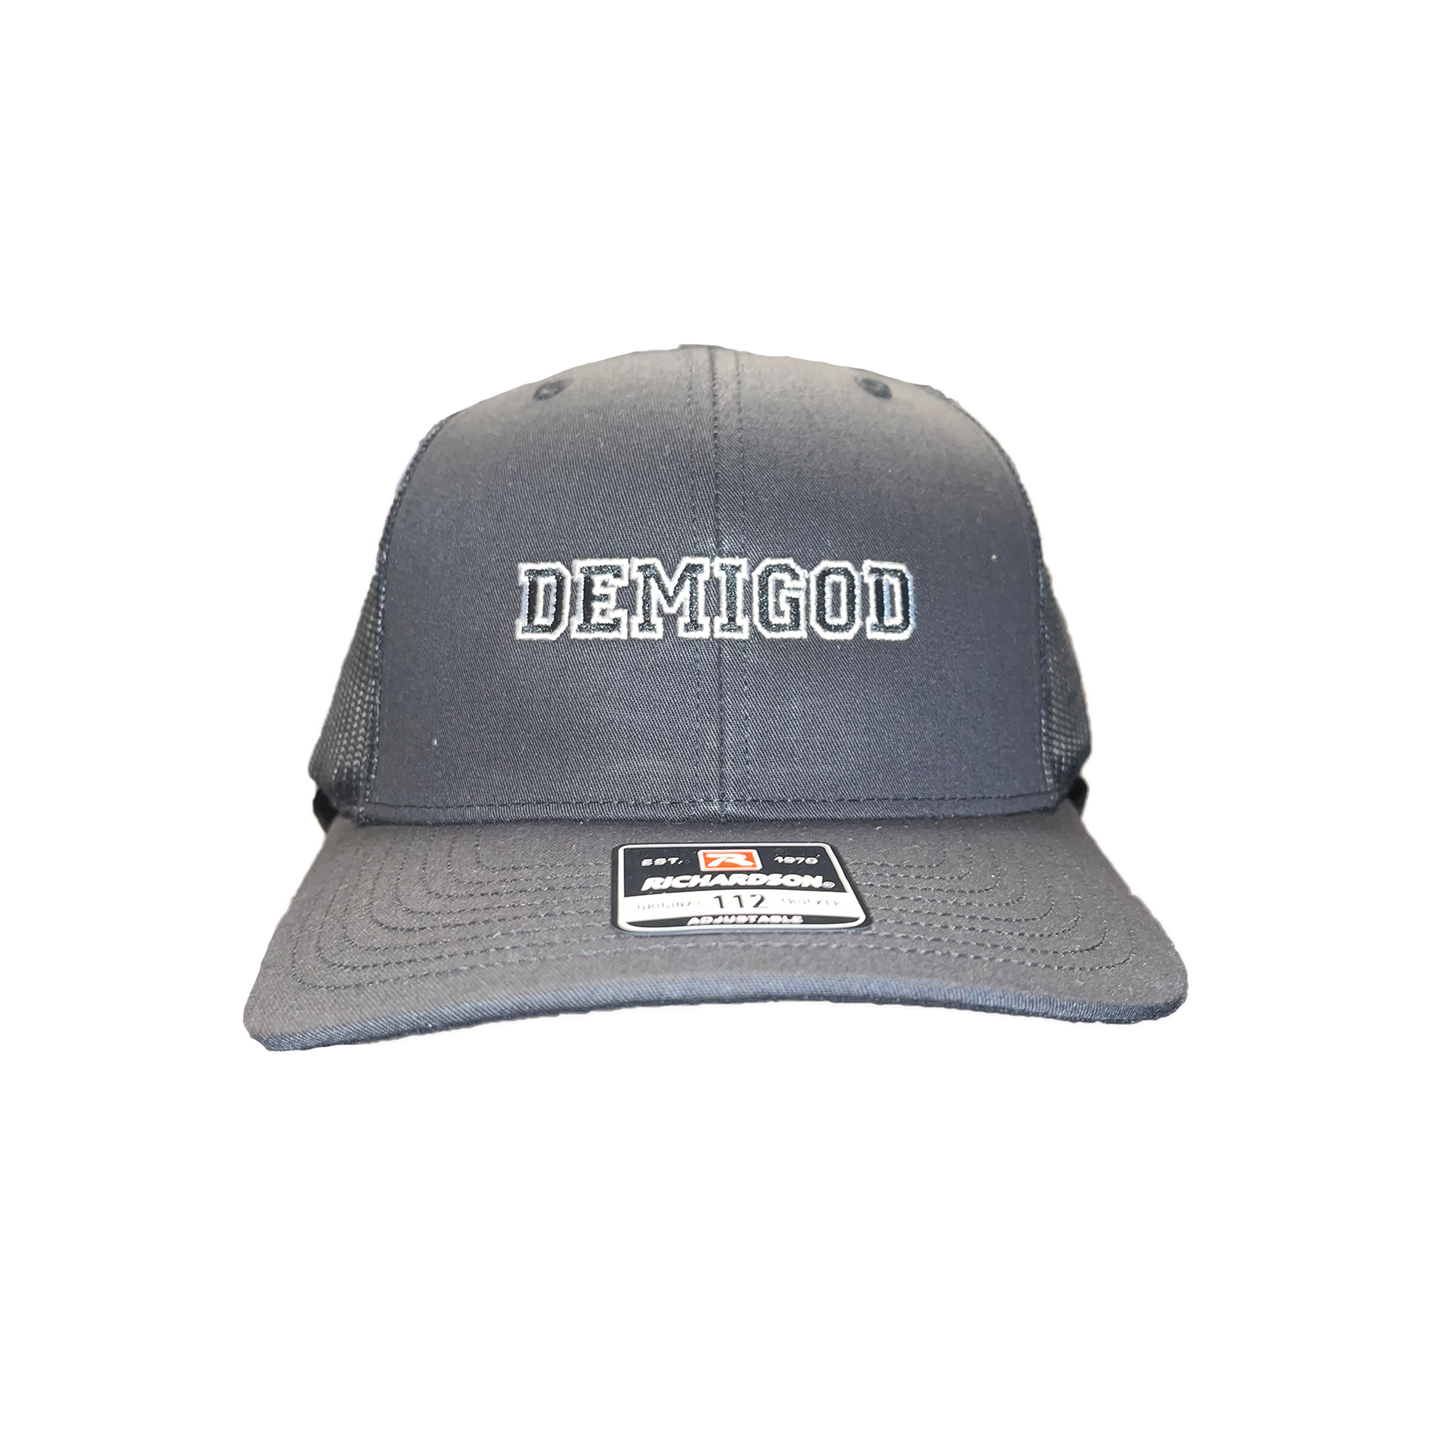 DEMIGOD TRUCKER HATS